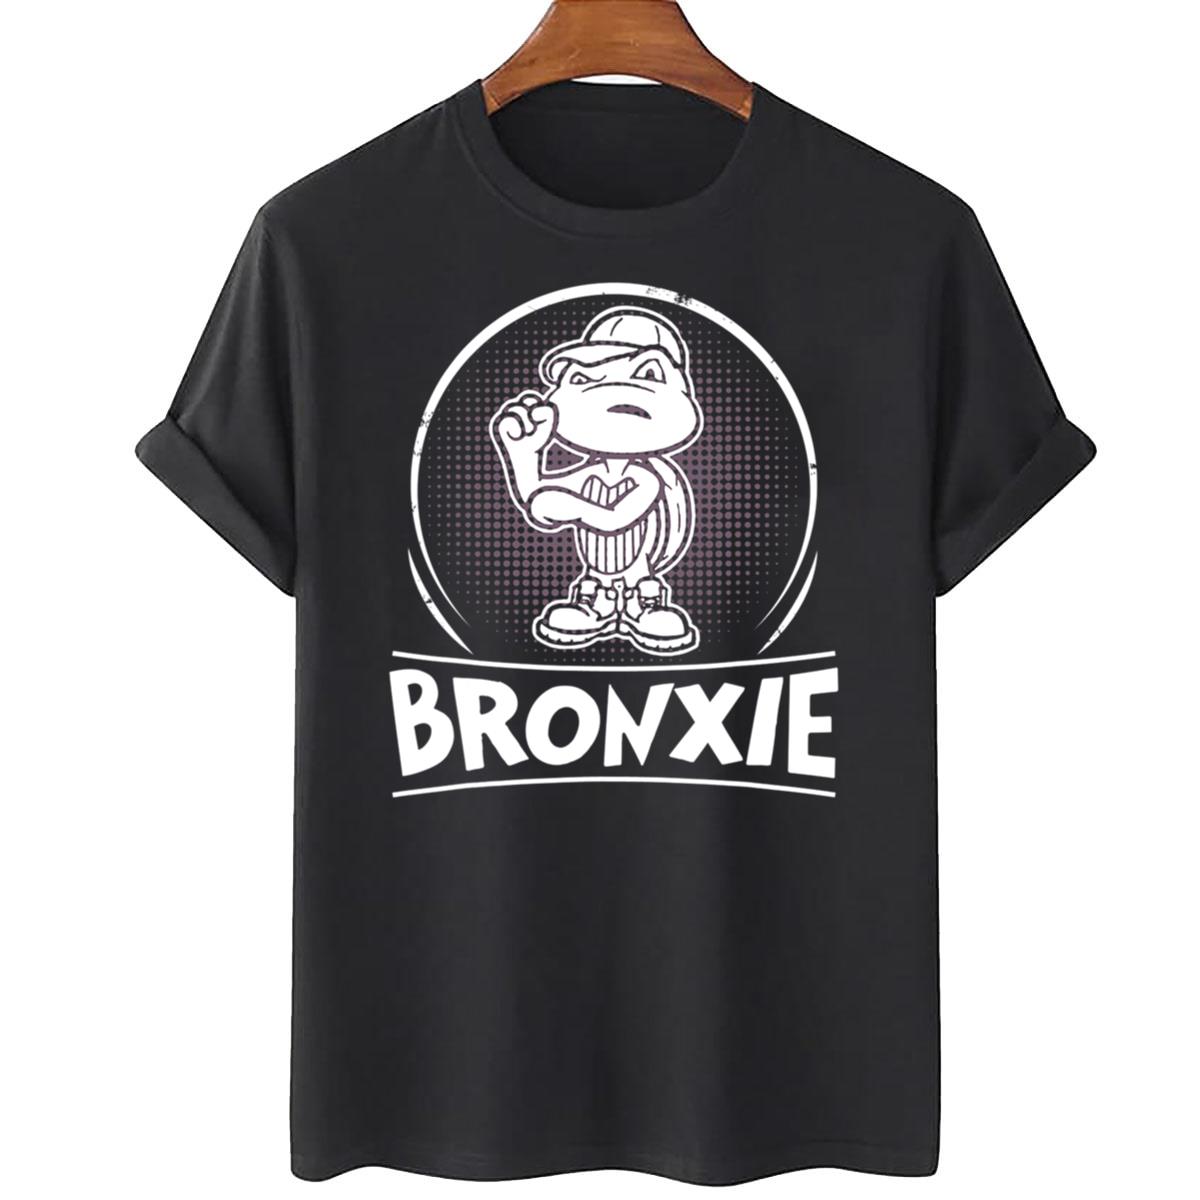 bronxie yankees lovertshirt stimx60433